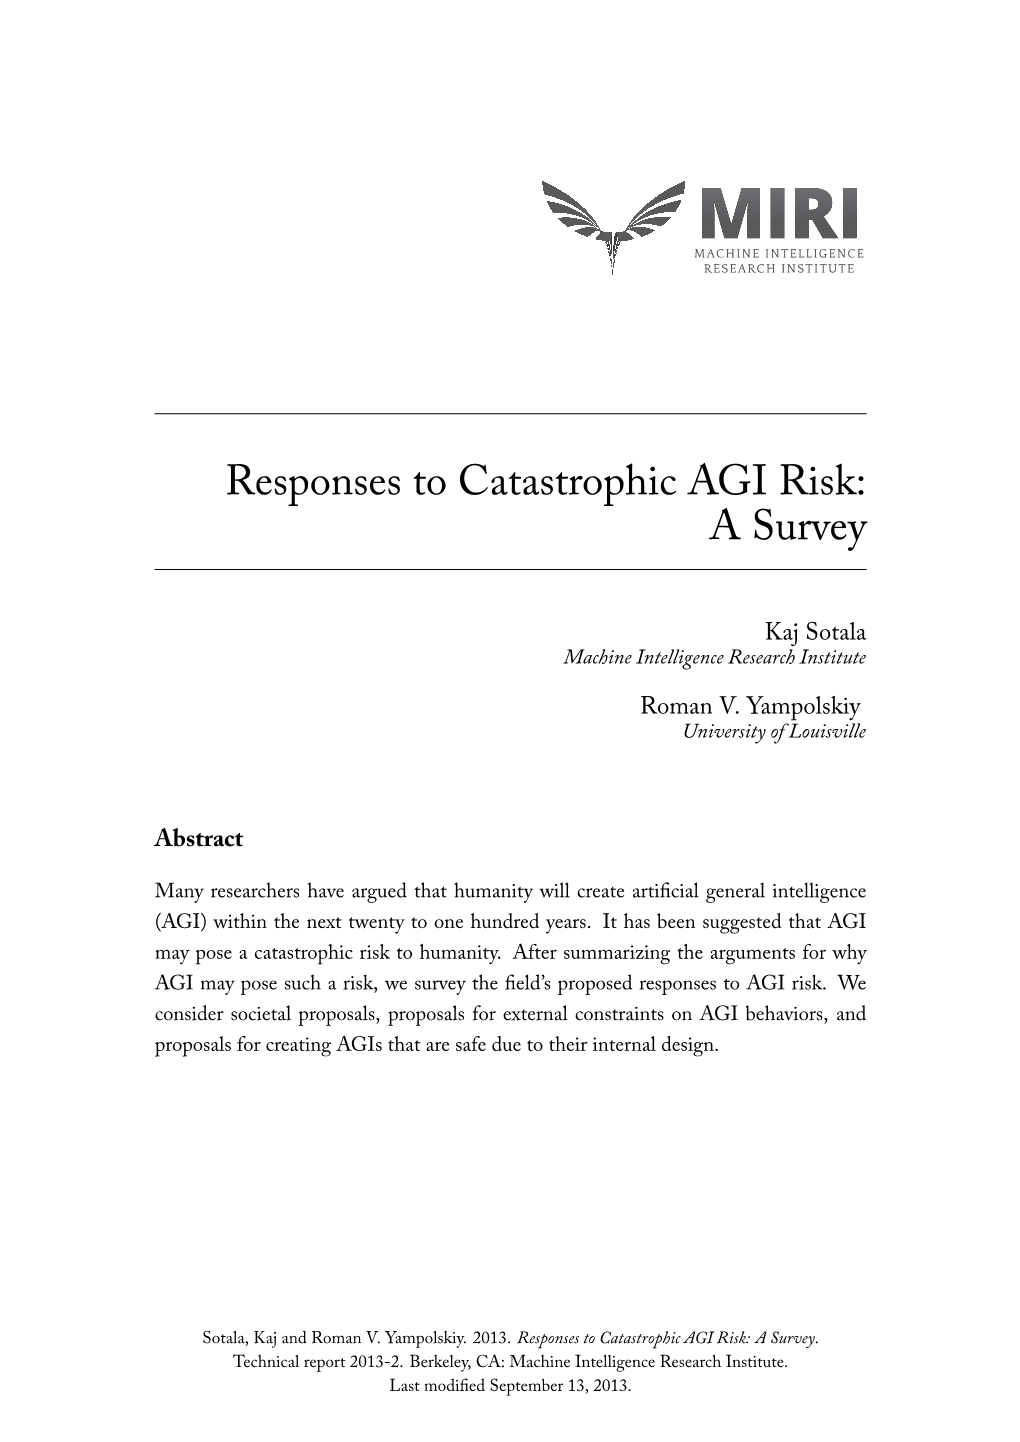 Responses to Catastrophic AGI Risk: a Survey